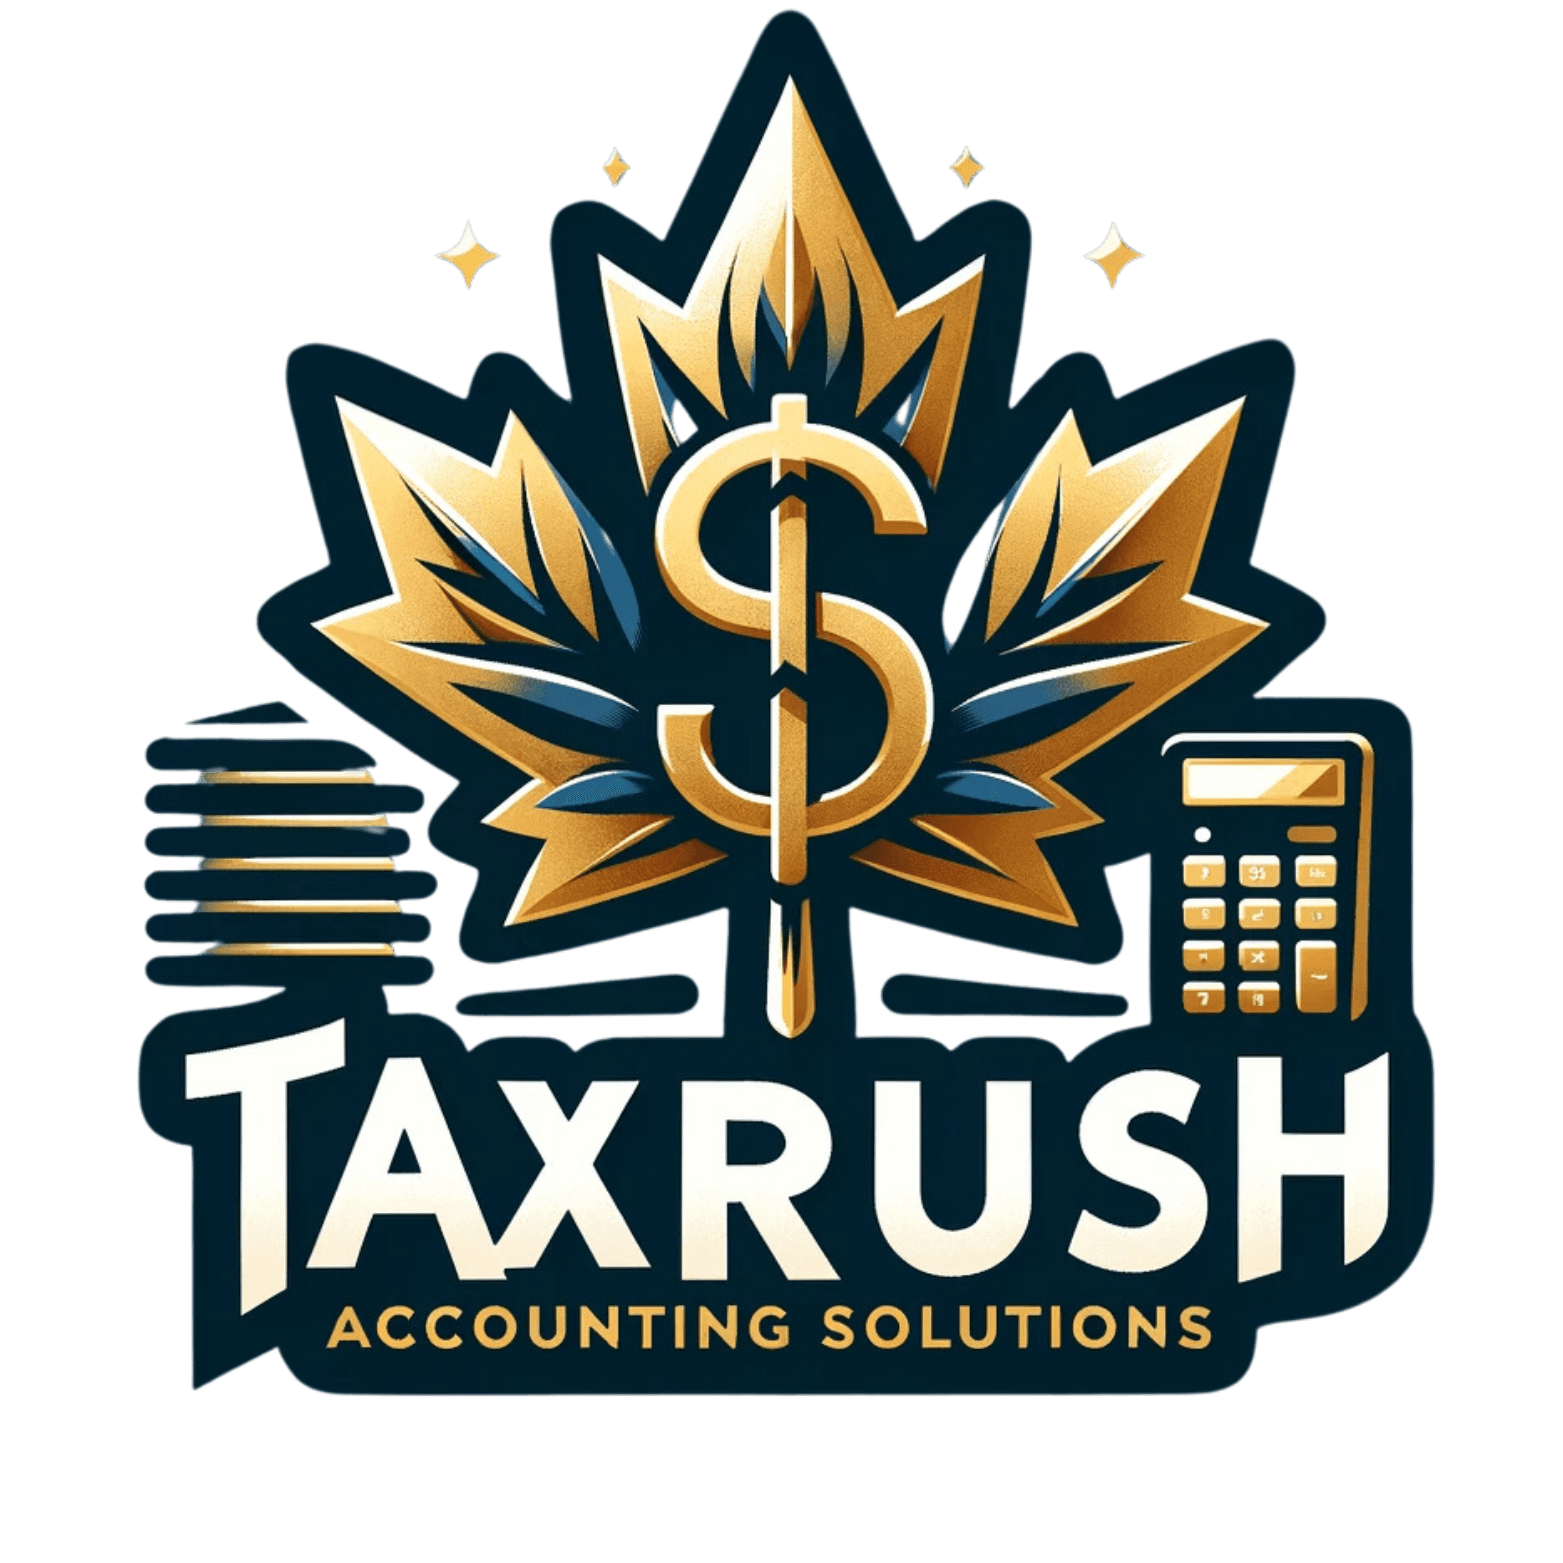 TaxRush Accounting Solutions